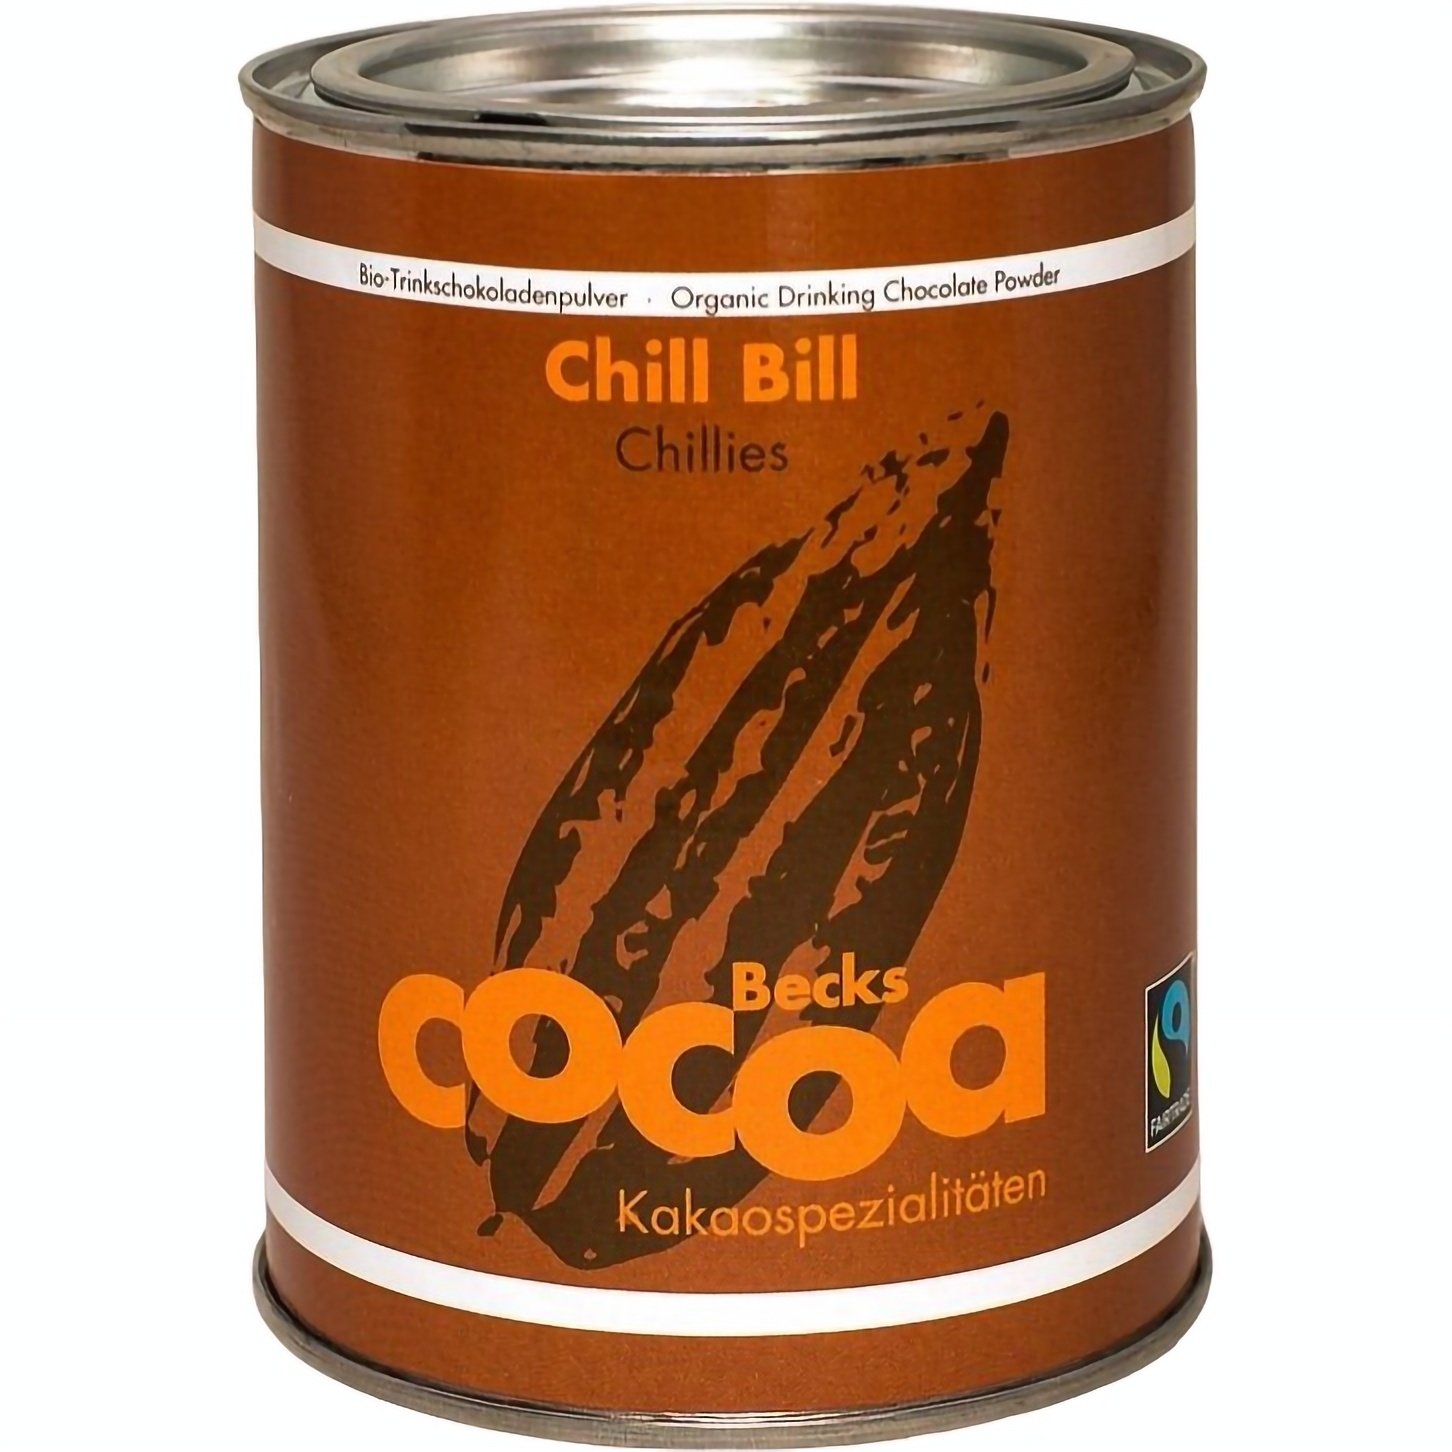 Какао-порошок Becks Cocoa Chill Bill органический 250 г - фото 1